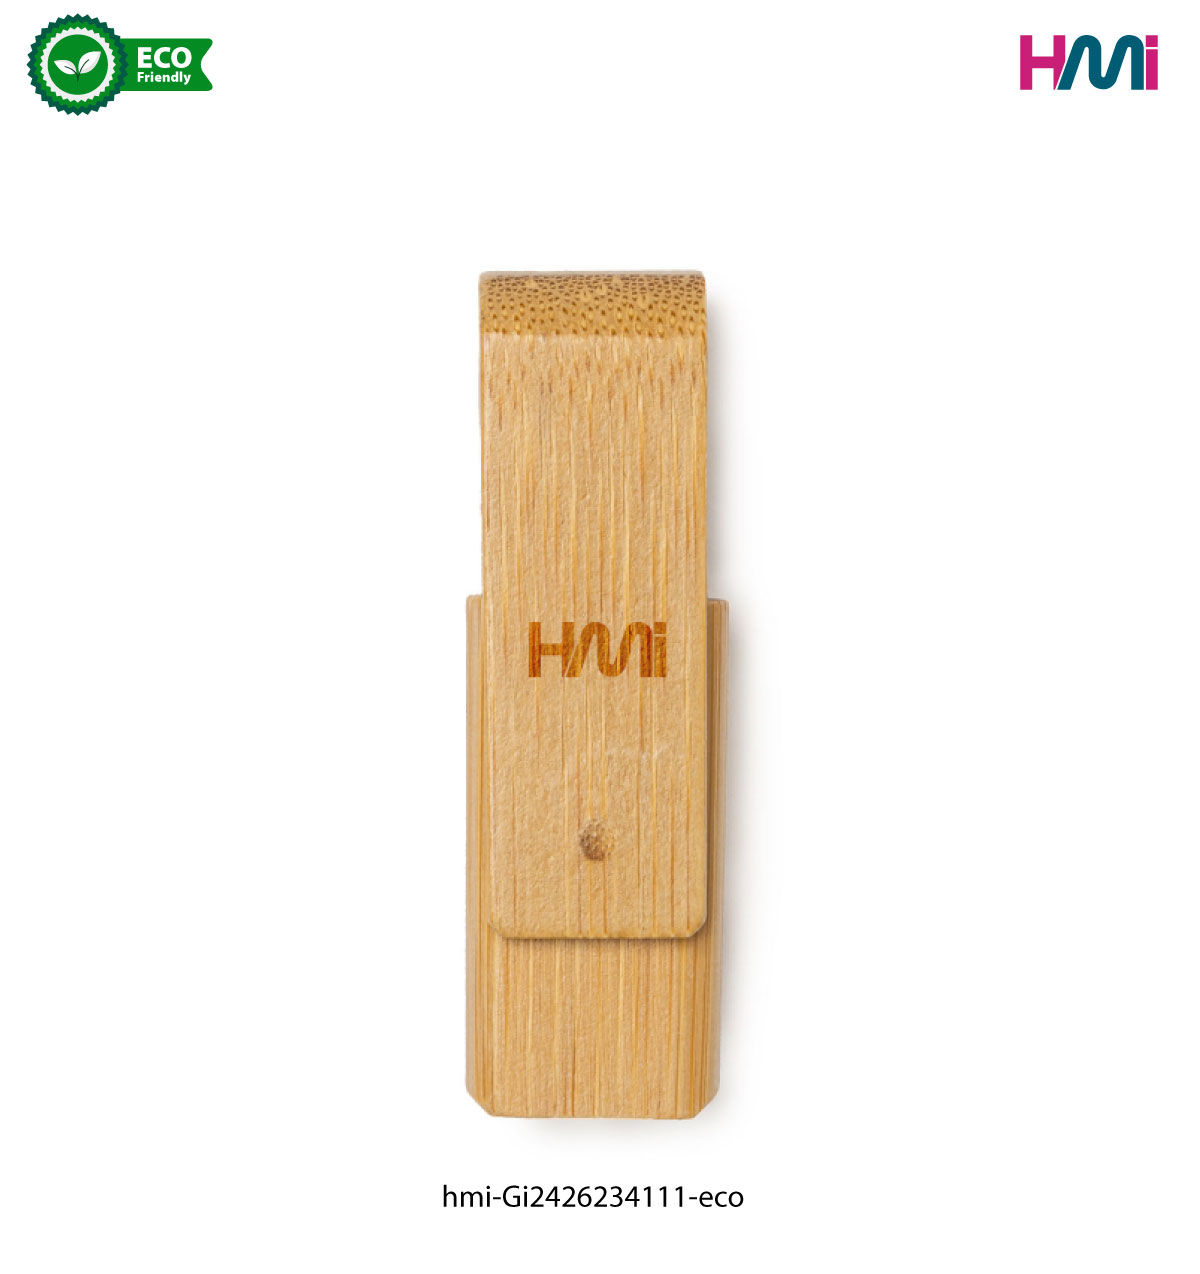 Eco-friendly USB-stick | Wooden USB-stick | Promotional USB Stick | Promotional Eco-friendly USB-stick printable in Germany | hmi-Gi2426234111-eco